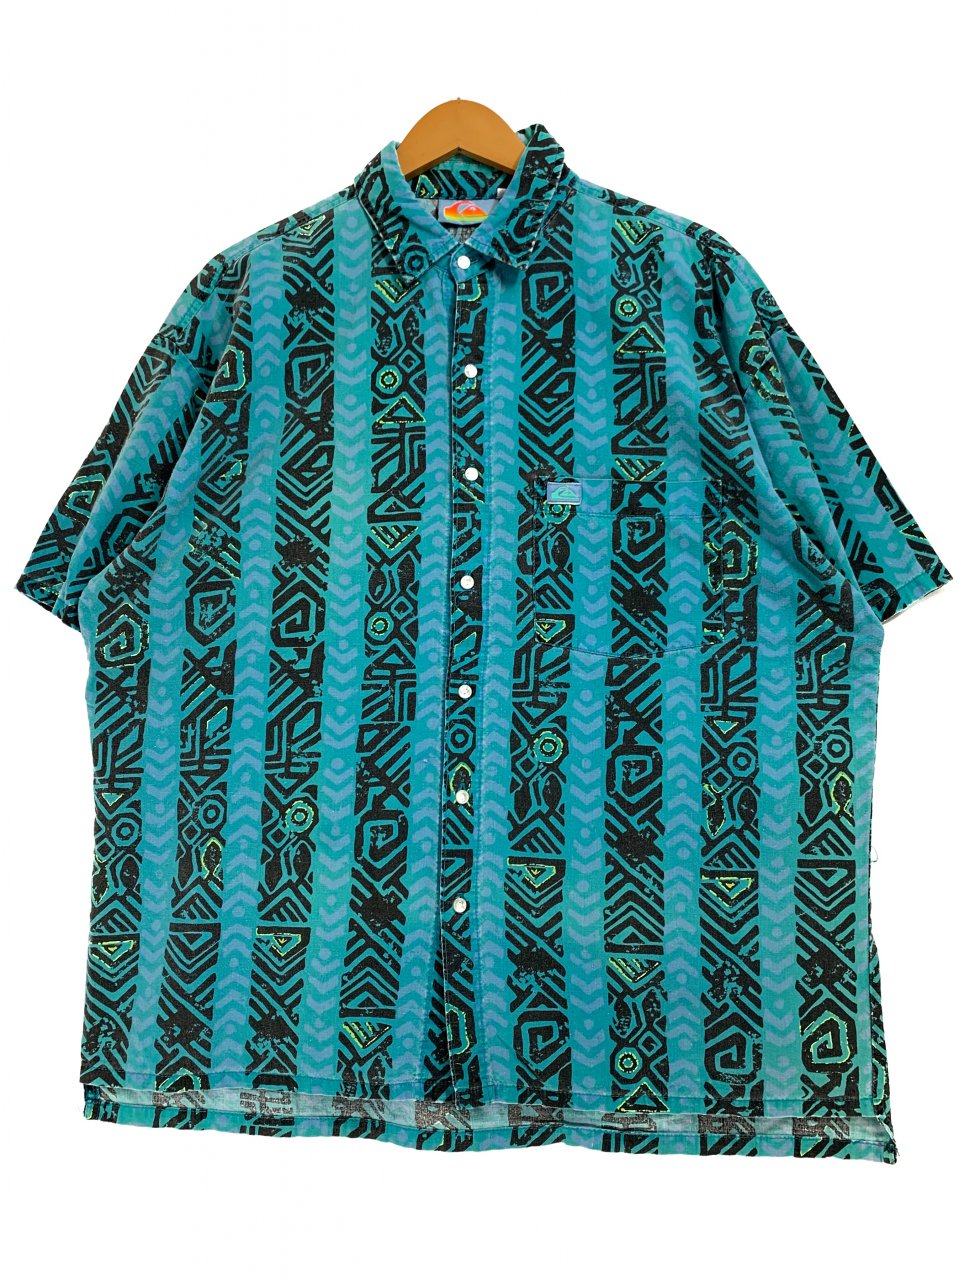 USA製 s QUIKSILVER Cotton Stripe S/S Shirts エメラルド M